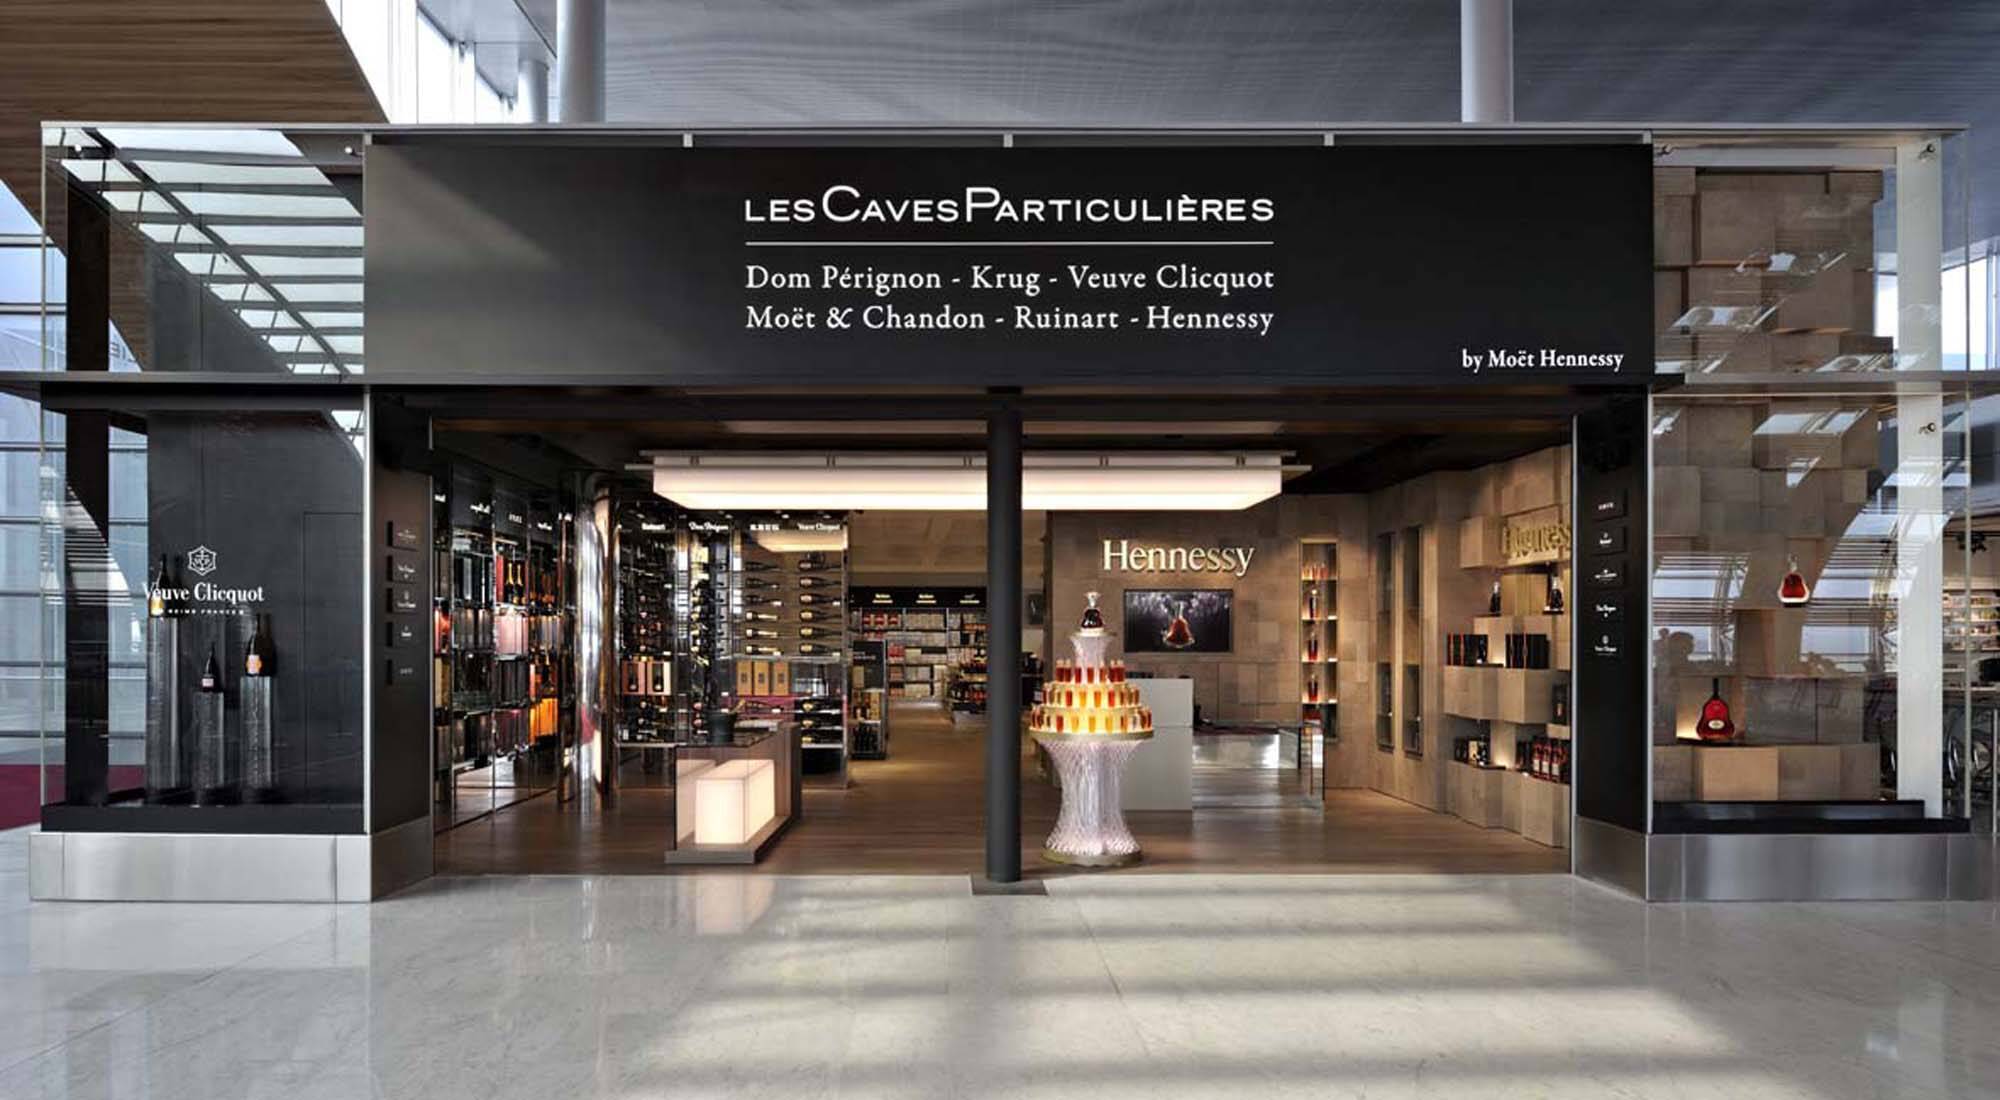 Claymont,DE  Louis Vuitton Moet Hennessy Luxury Champagne Portfolio  Experience